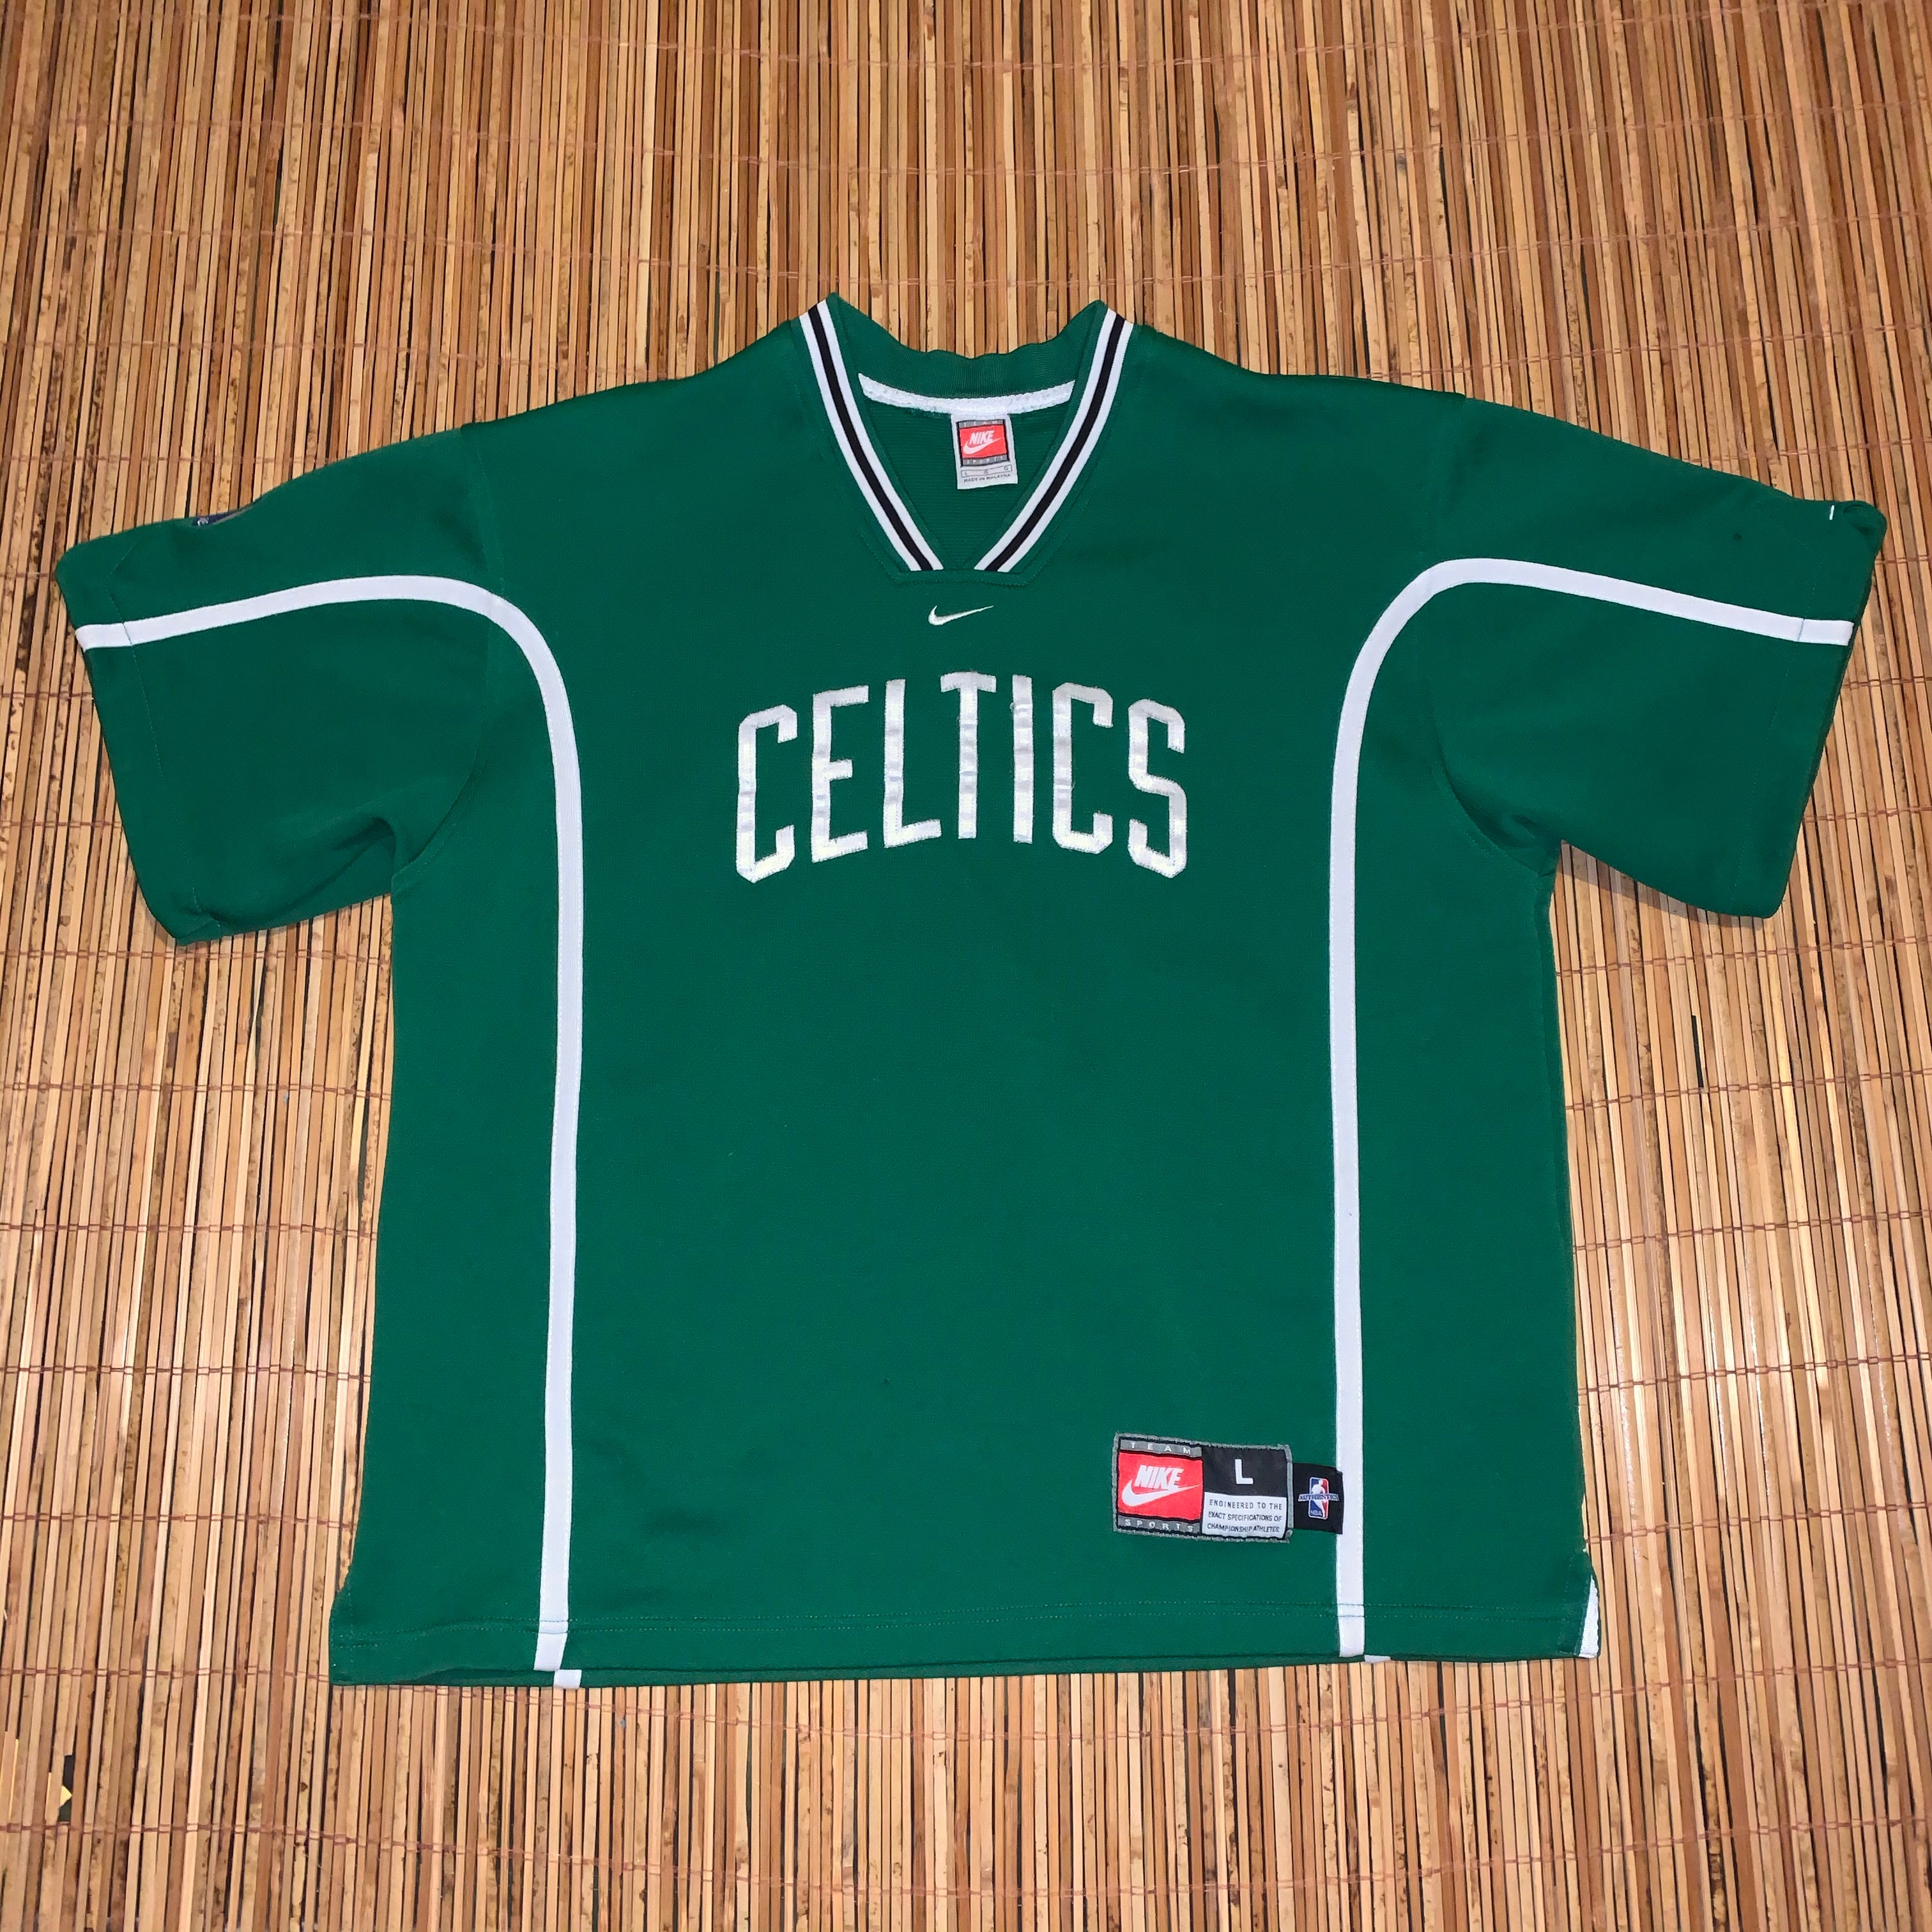 Sold at Auction: (19) Vintage Boston Celtics Apparel. 1980s/90s.